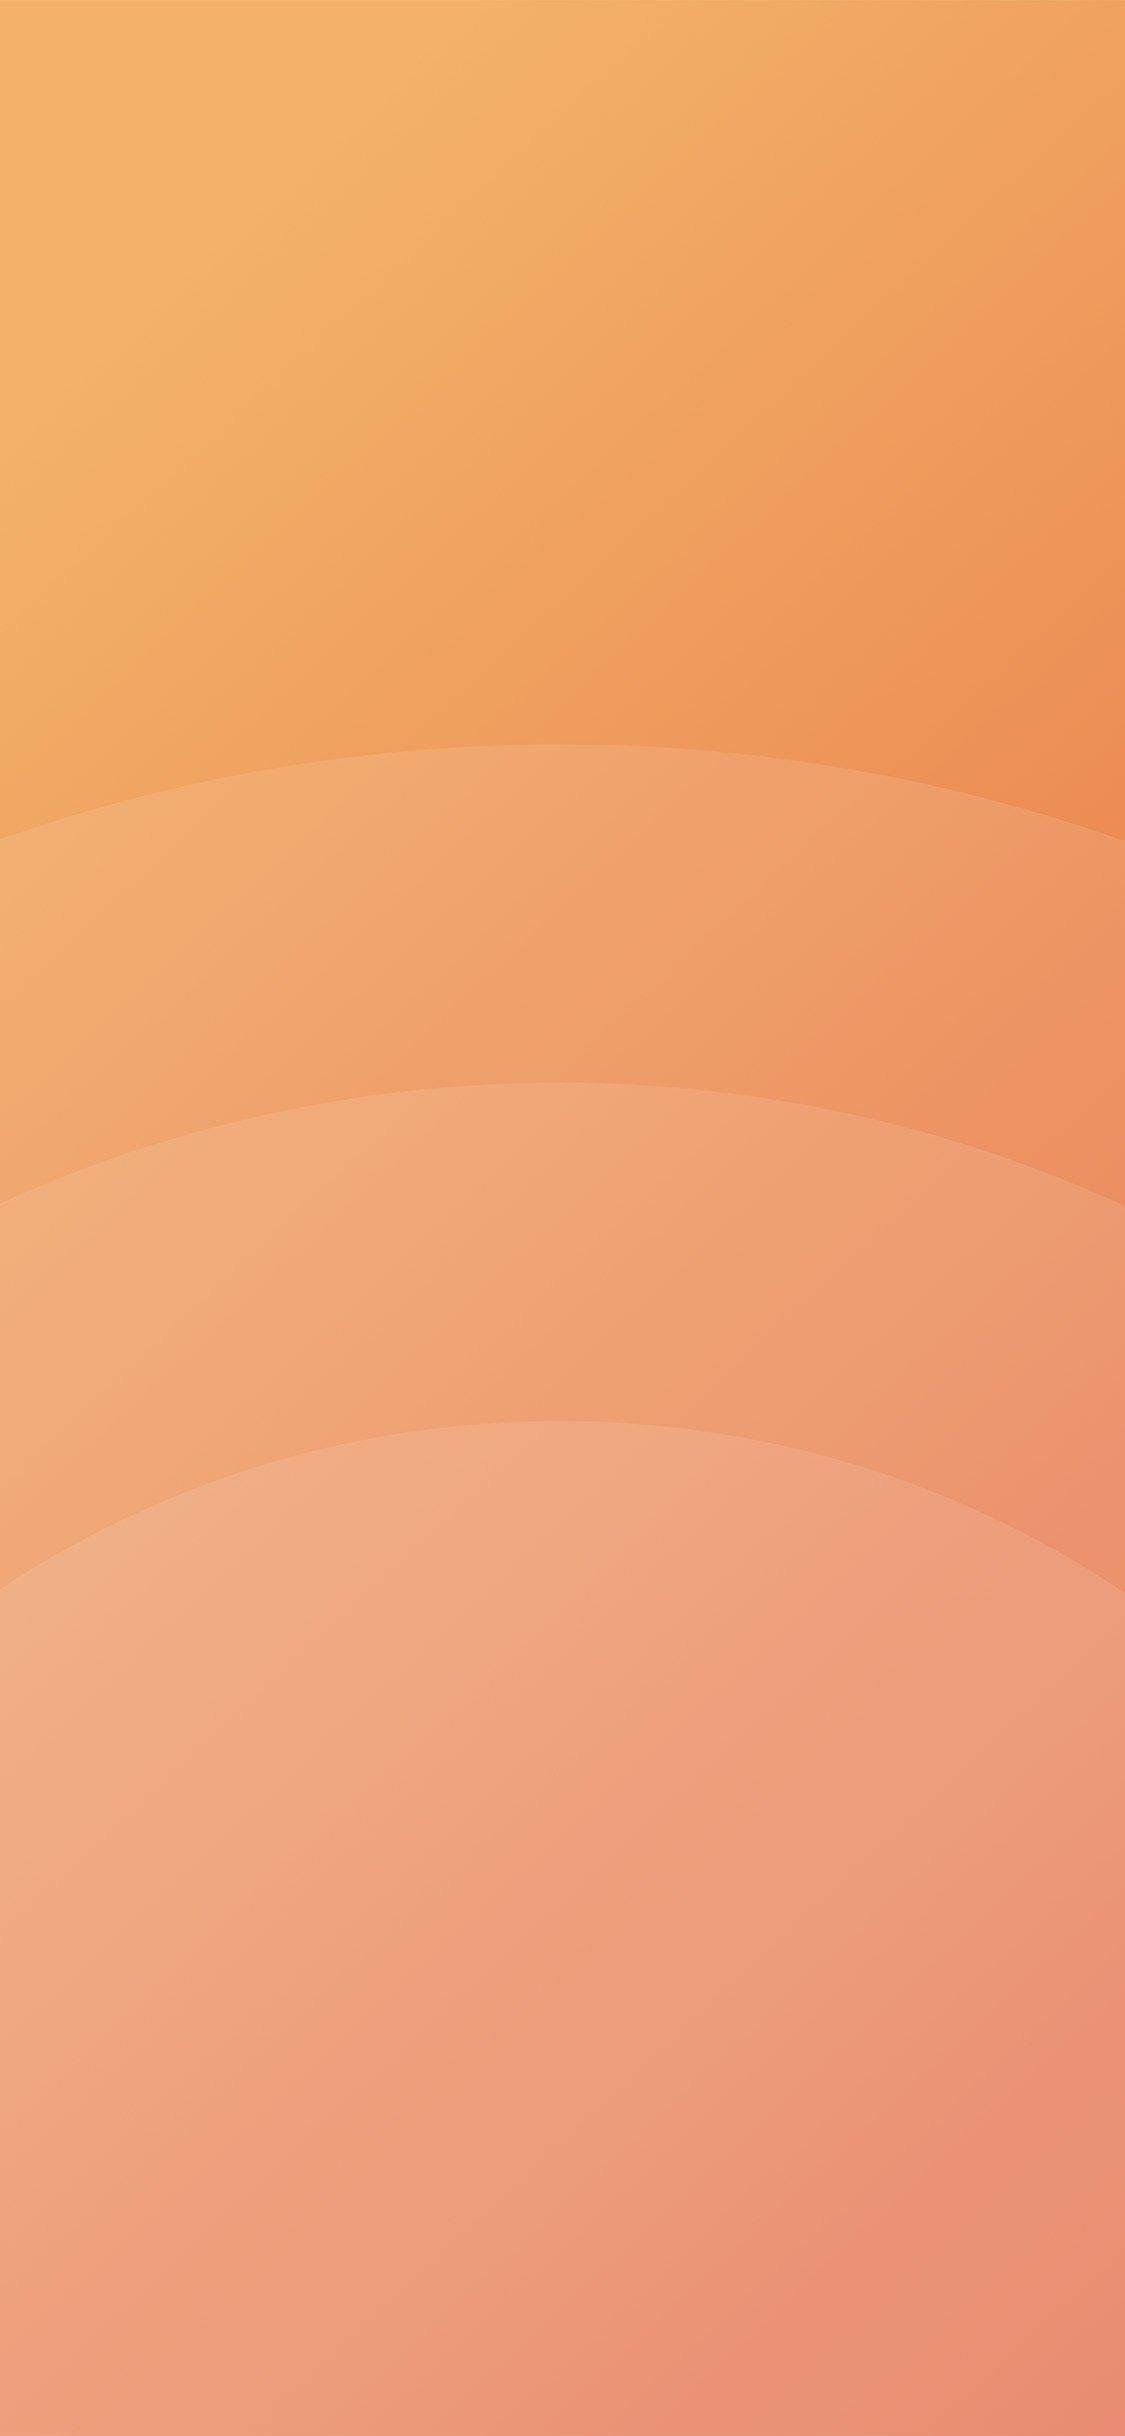 Circle orange simple minimal pattern background iPhone X